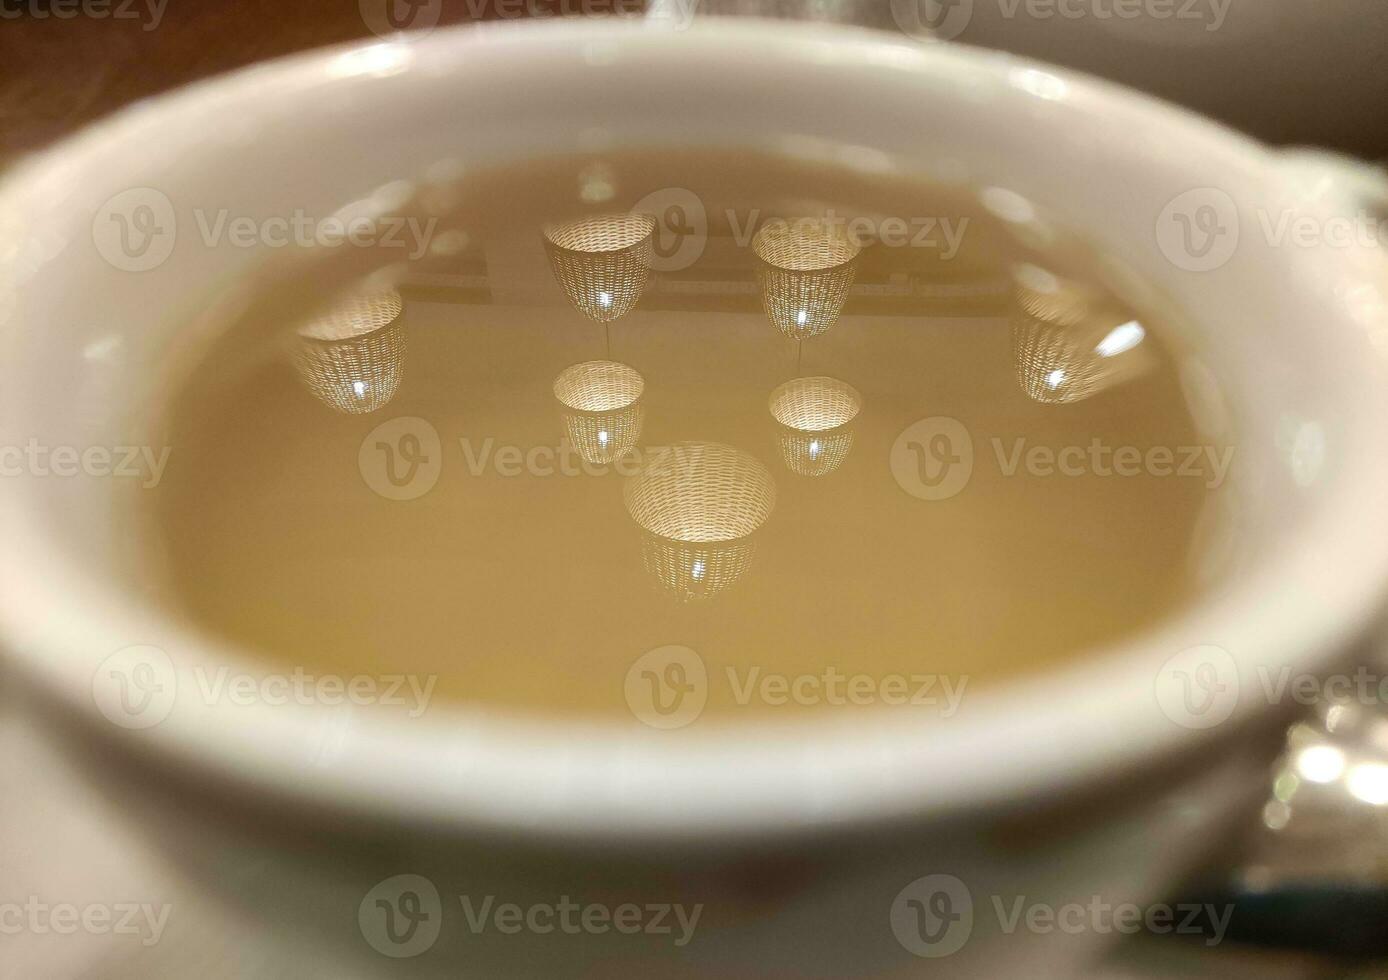 lampor reflexion i en kopp av te bakgrund foto